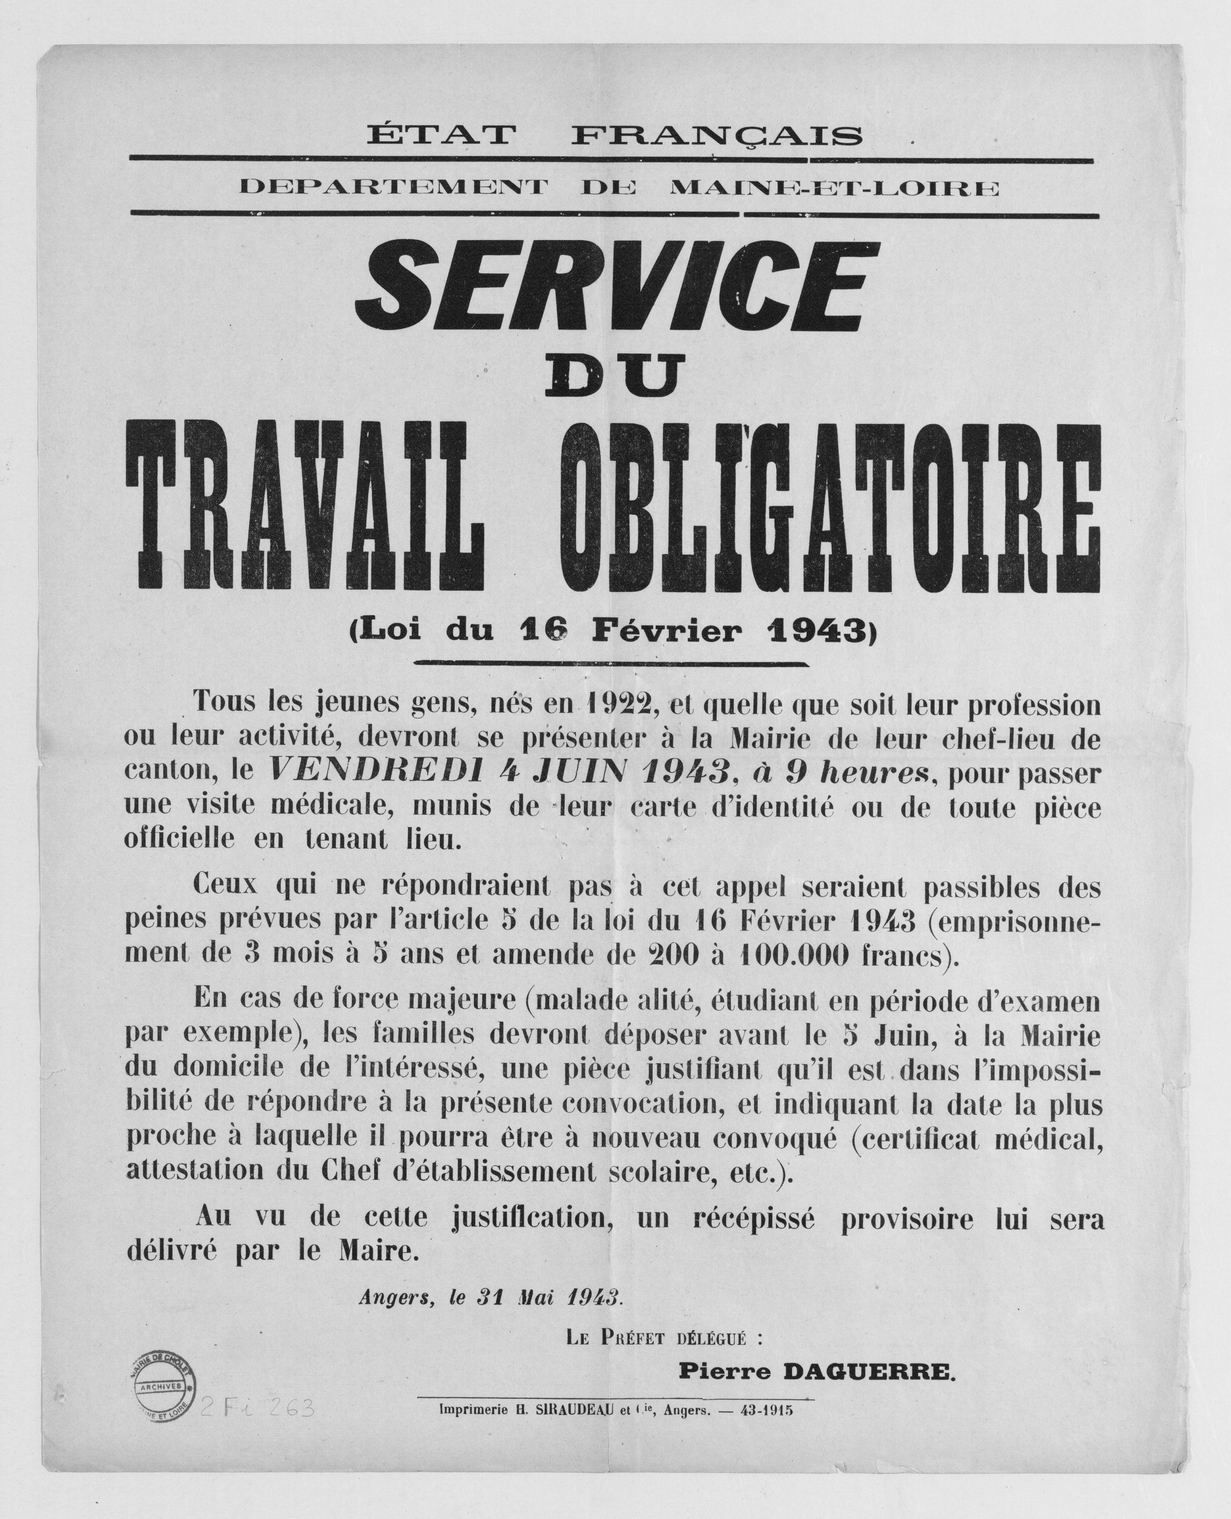 2Fi263 - Affiche du Service du Travail Obligatoire, 31 mai 1943. Coll. AMC